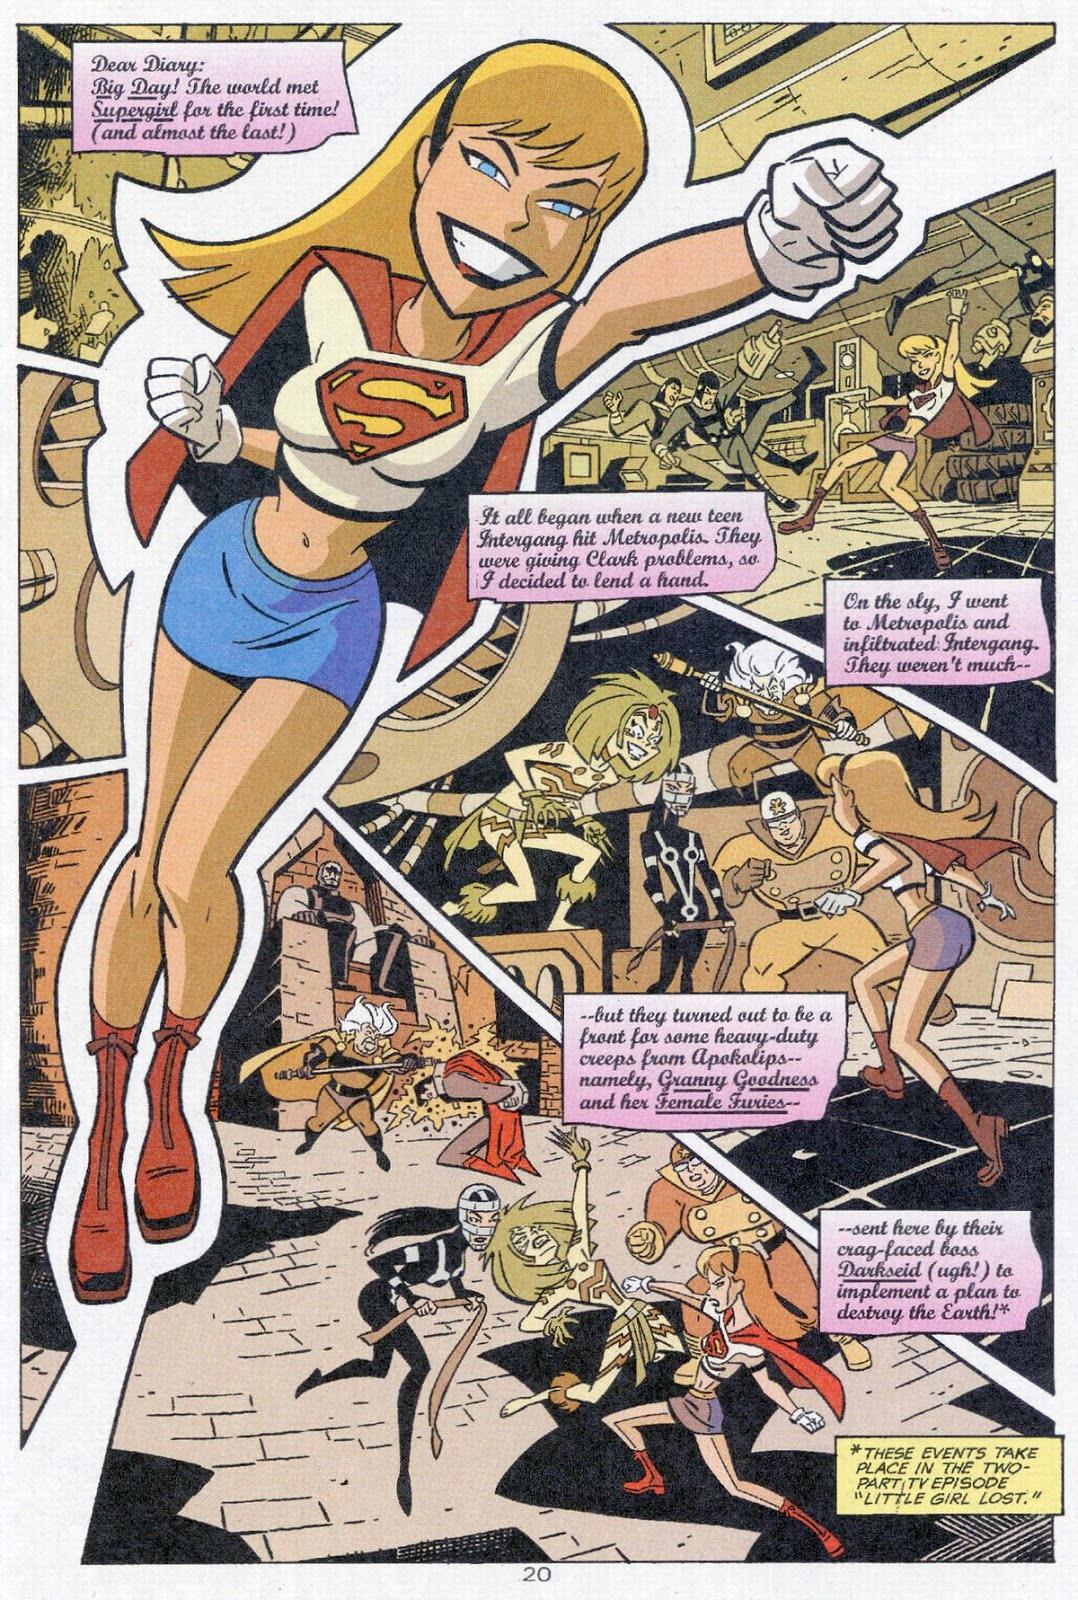 Supergirl Adventures Girl of Steel review